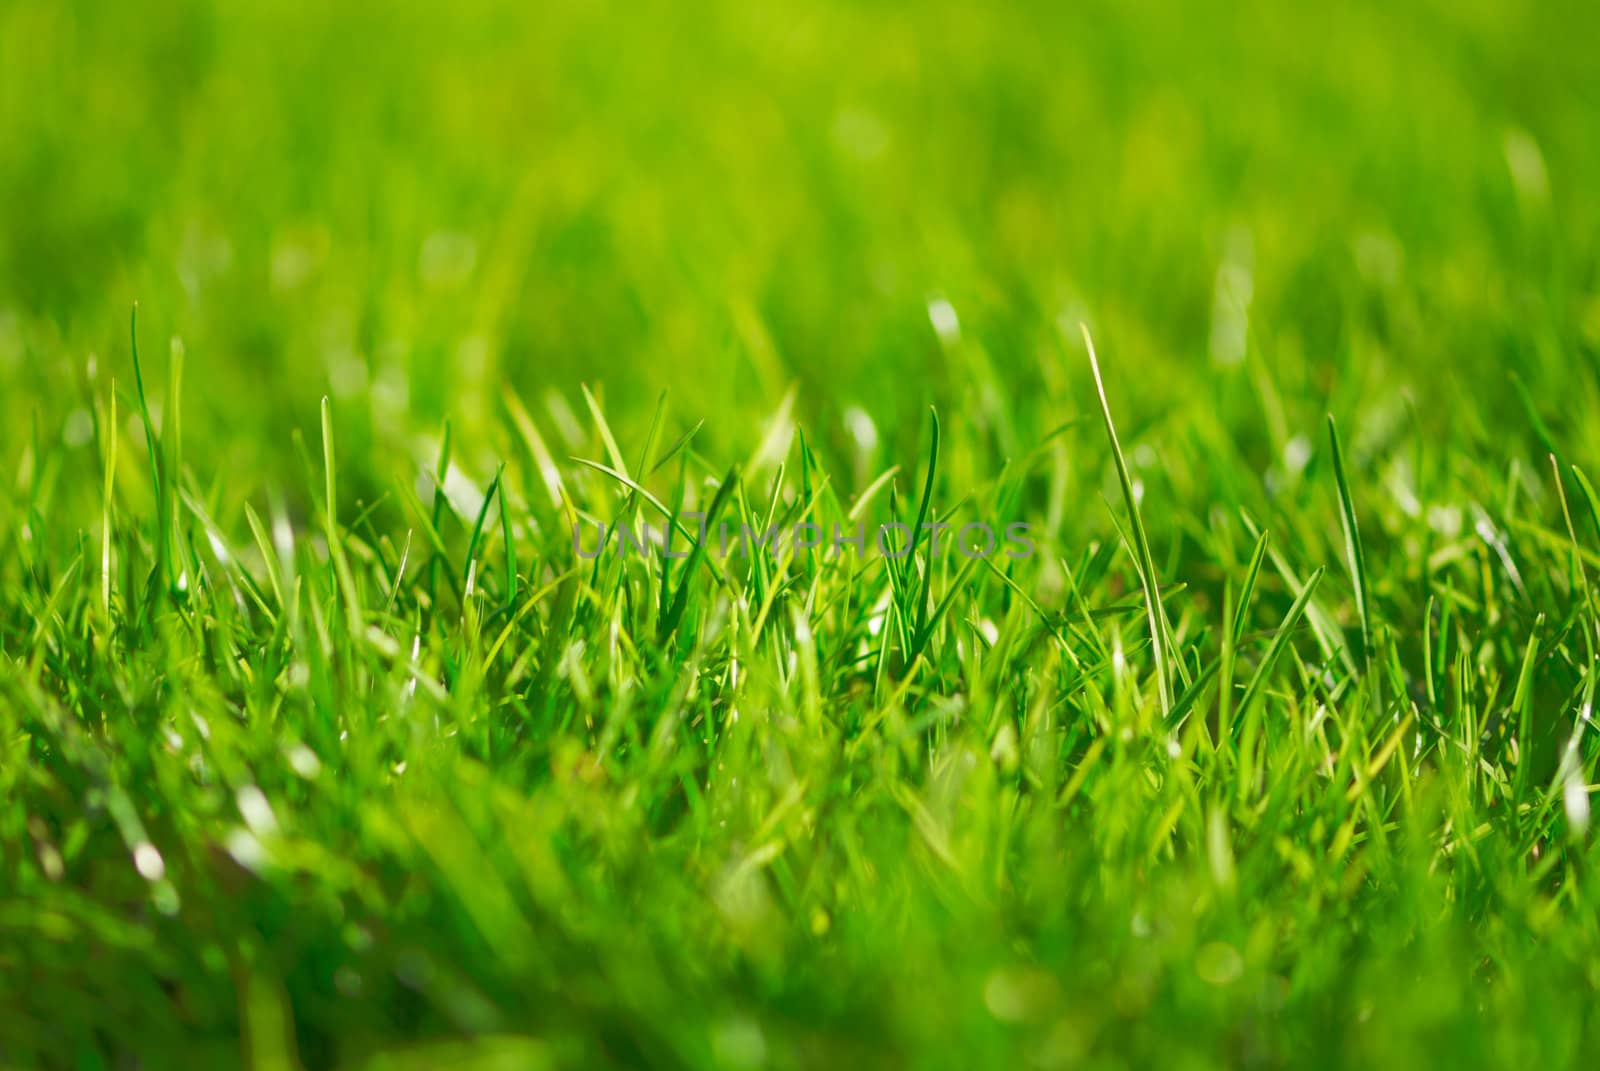 Green grass by Olinkau